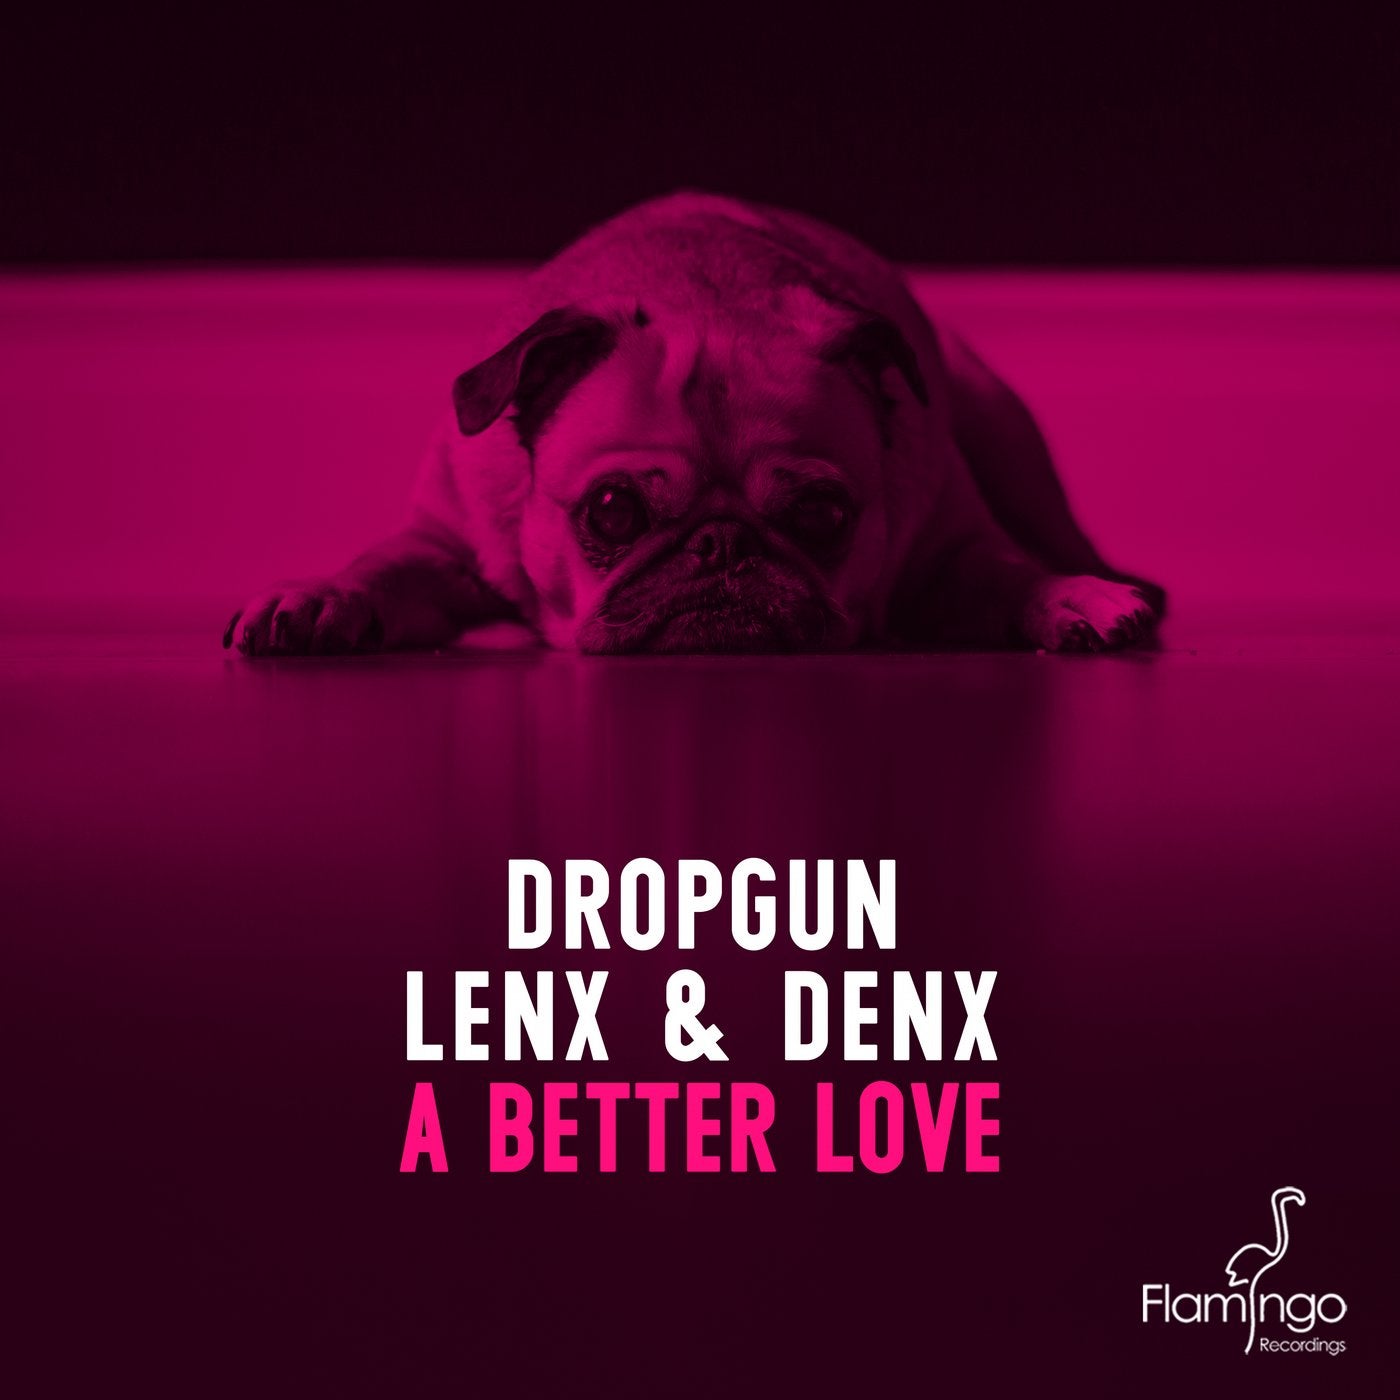 Better love текст. LENX. Flamingo recordings 2016. Dropgun. You better not Love me.